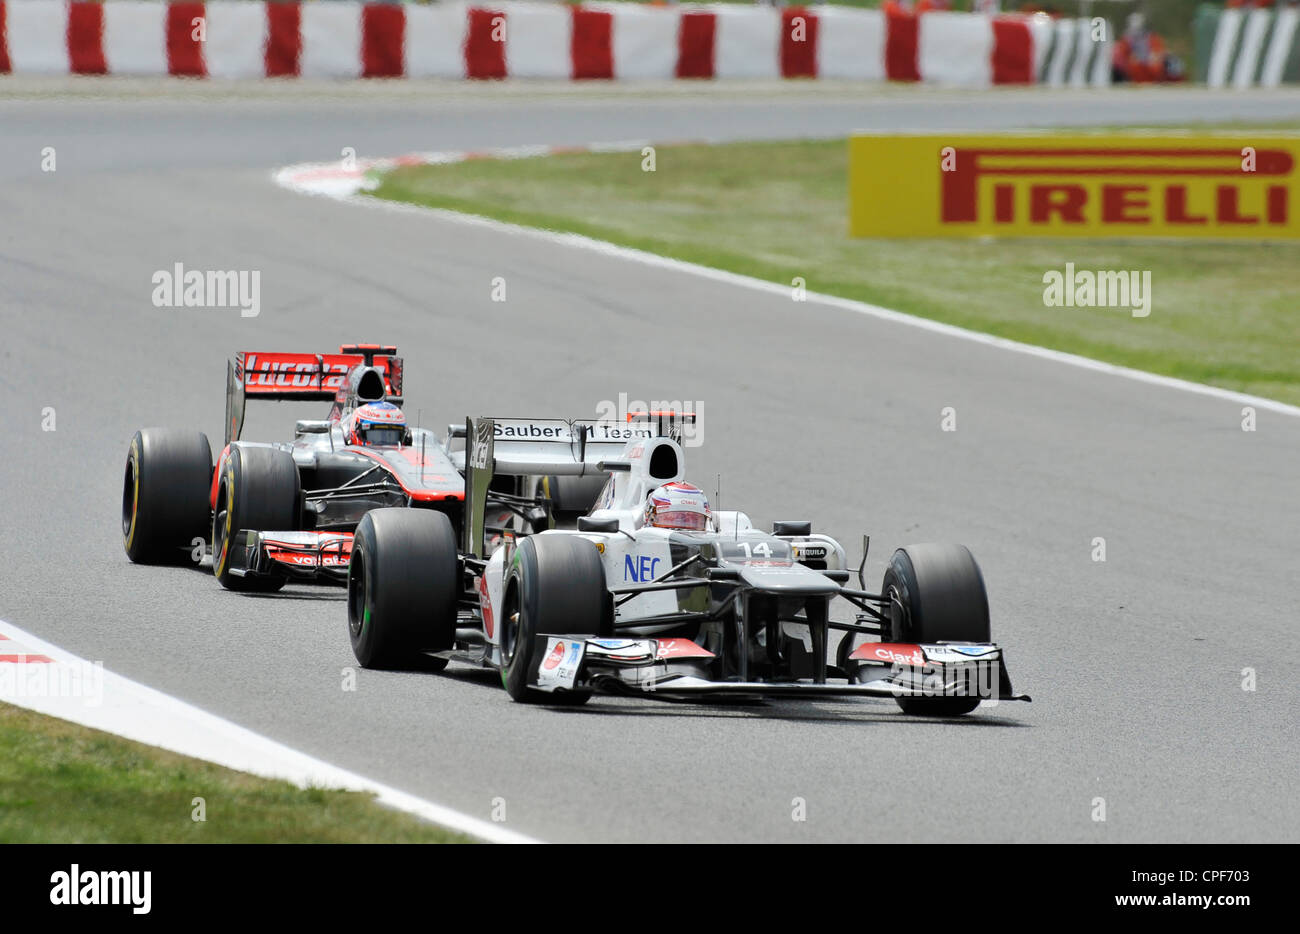 Kamui Kobayashi (JPN) im Sauber C31 and Jenson Button (GBR) im McLaren Mercedes  during the Formula One Grand Prix of Spain 2012 Stock Photo